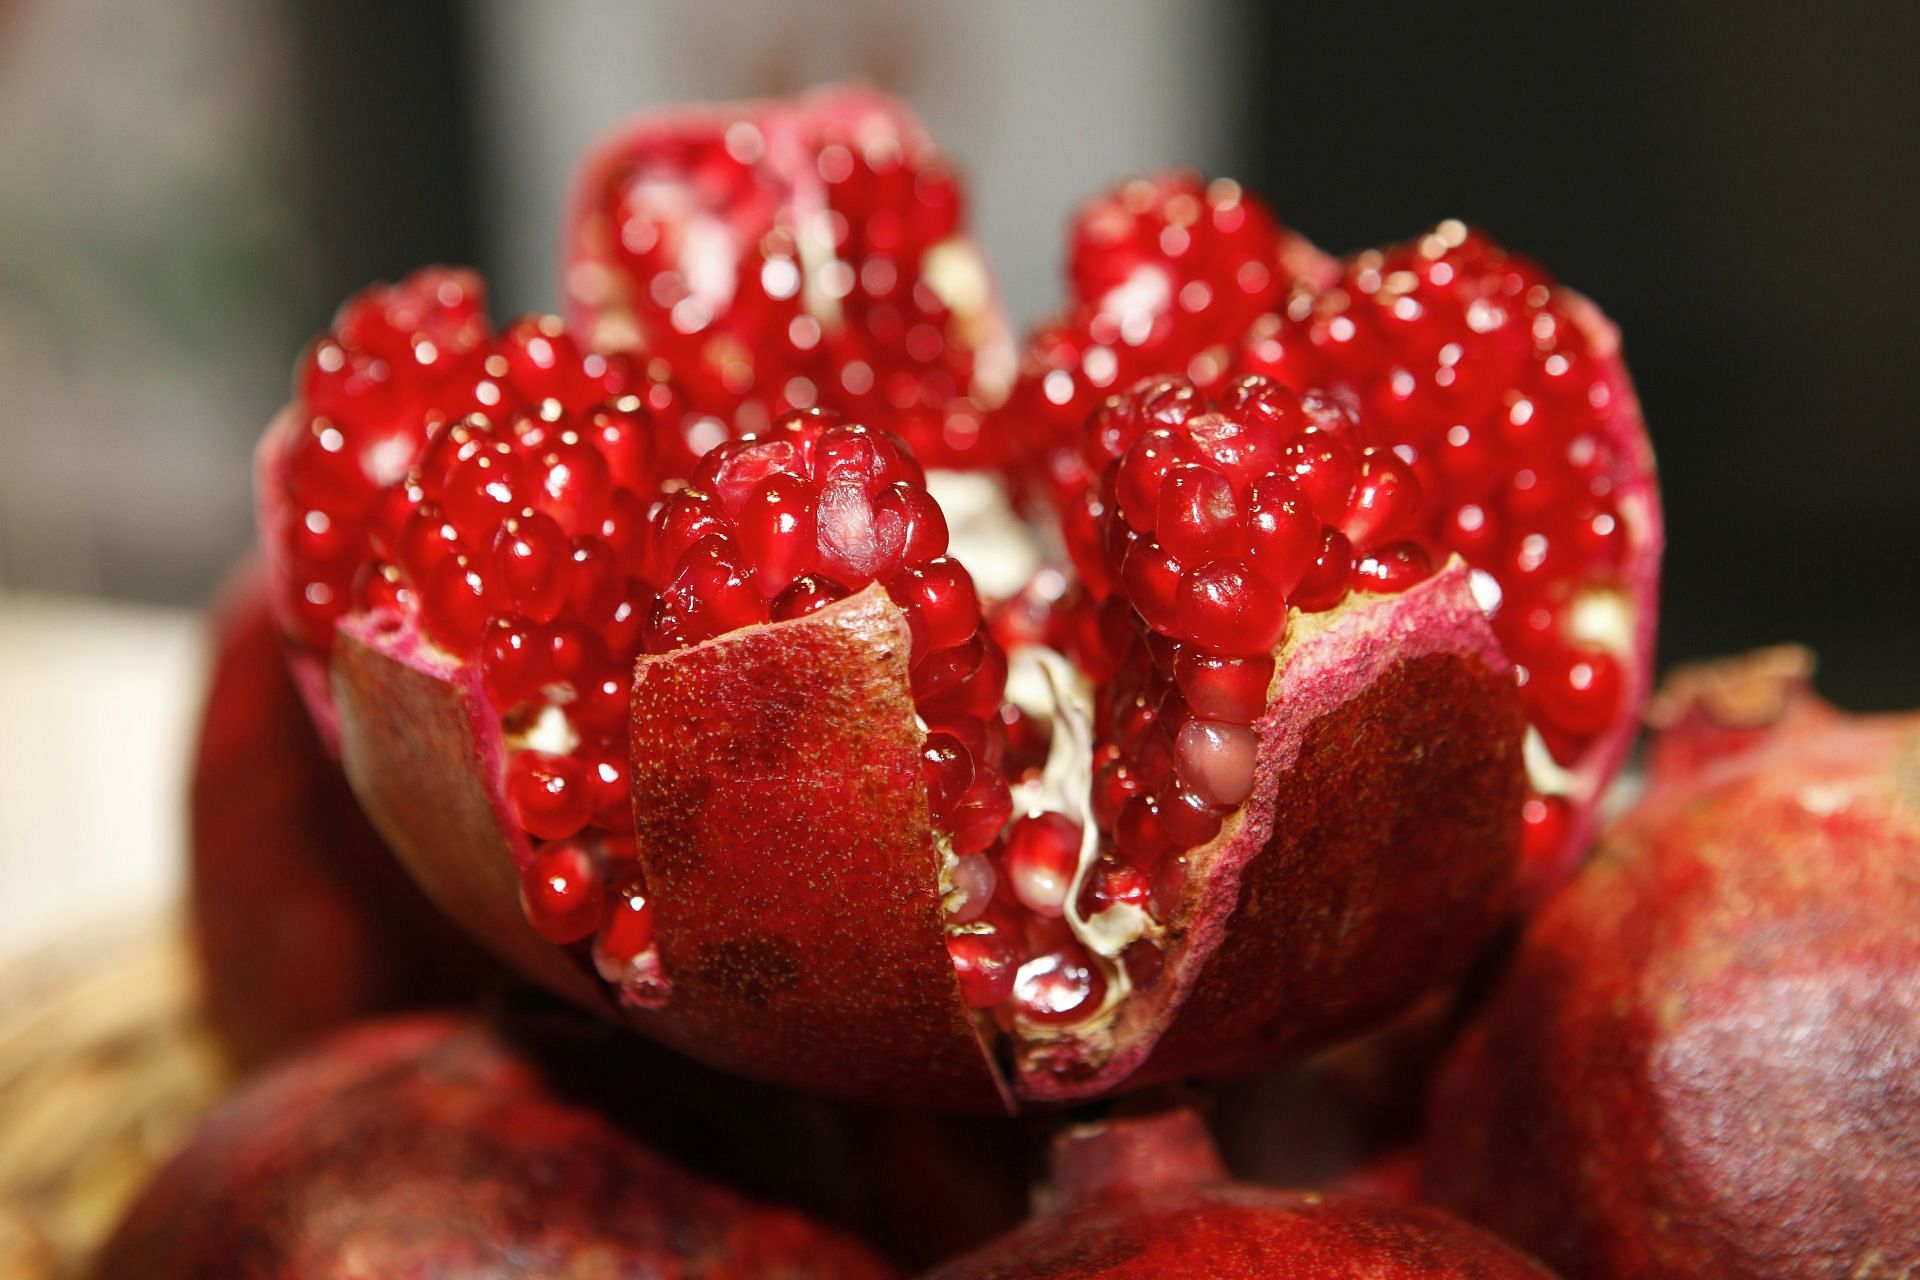 Pomegranate benefits (image sourced via Pexels / Photo by Pixabay)